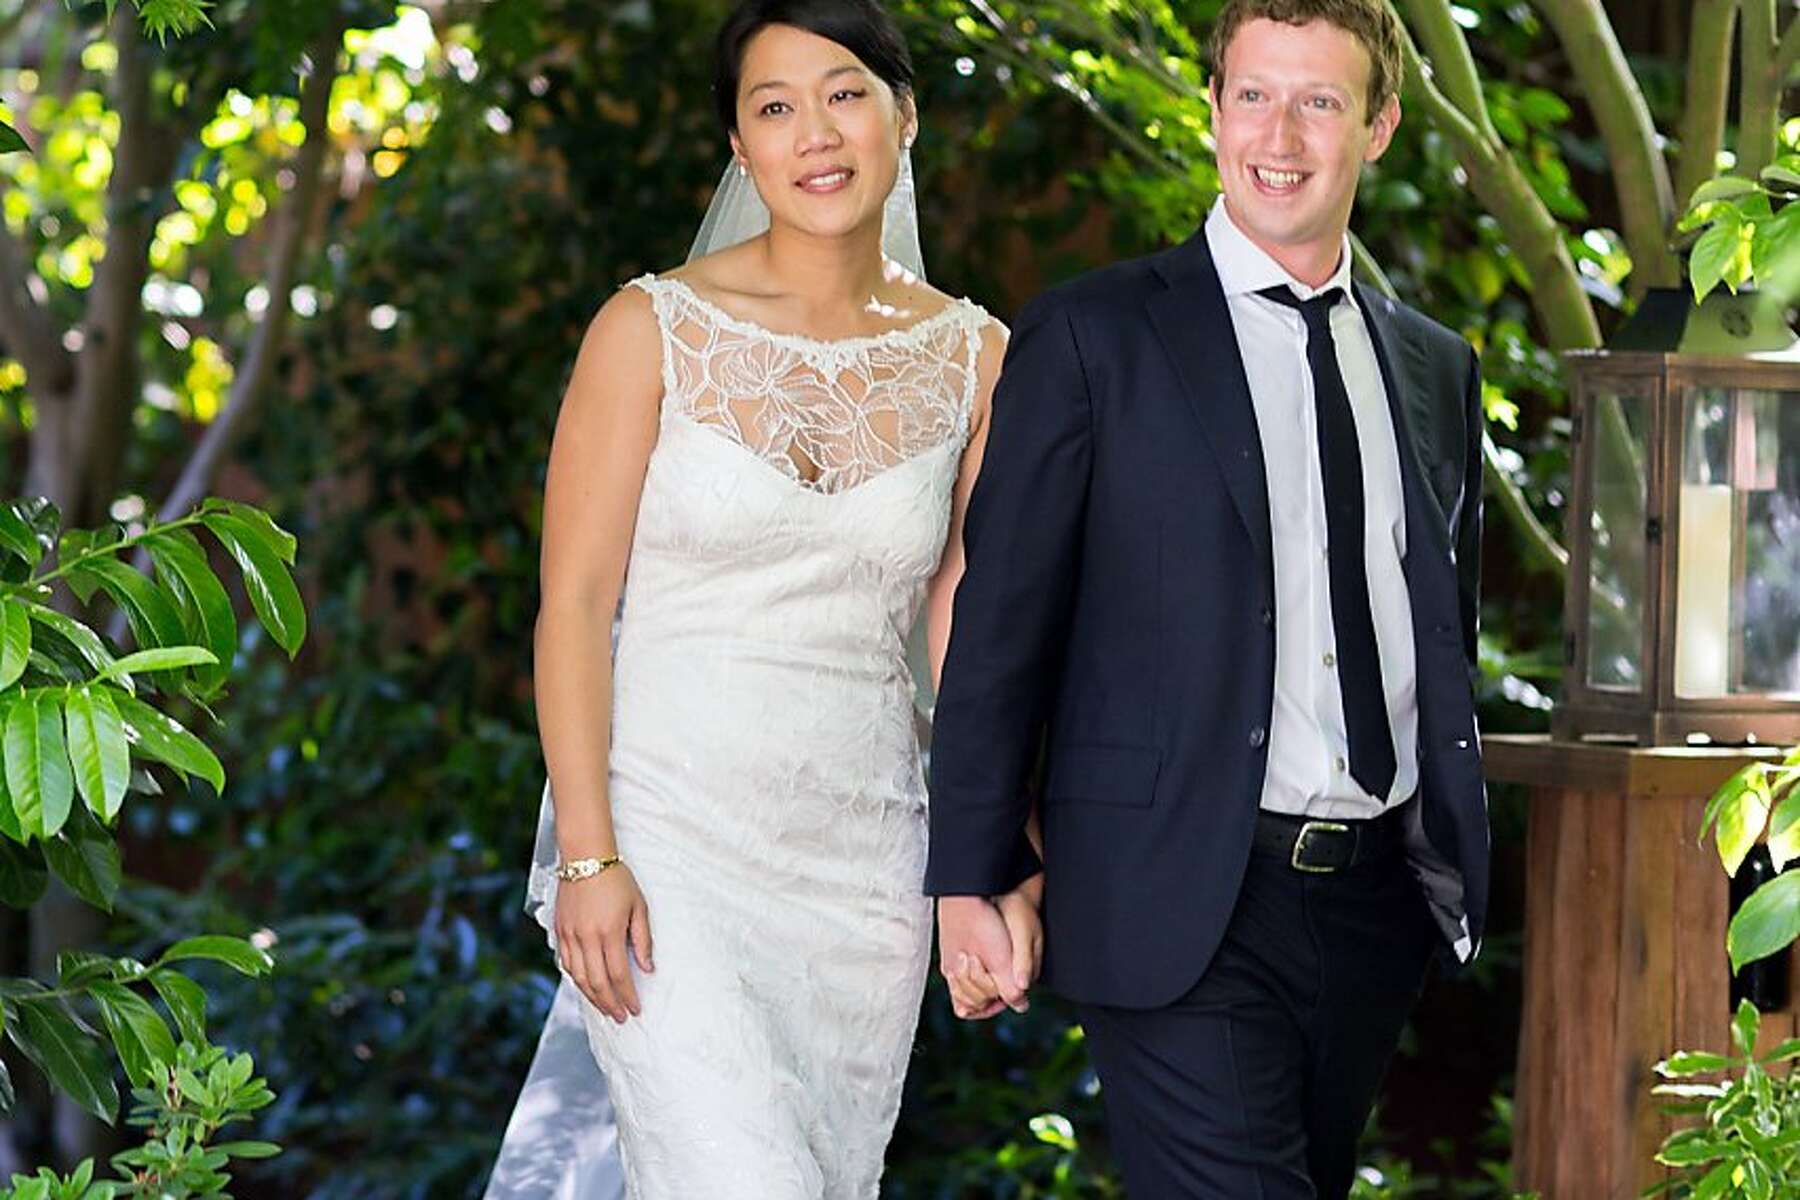 Facebook CEO Mark Zuckerberg weds Priscilla Chan